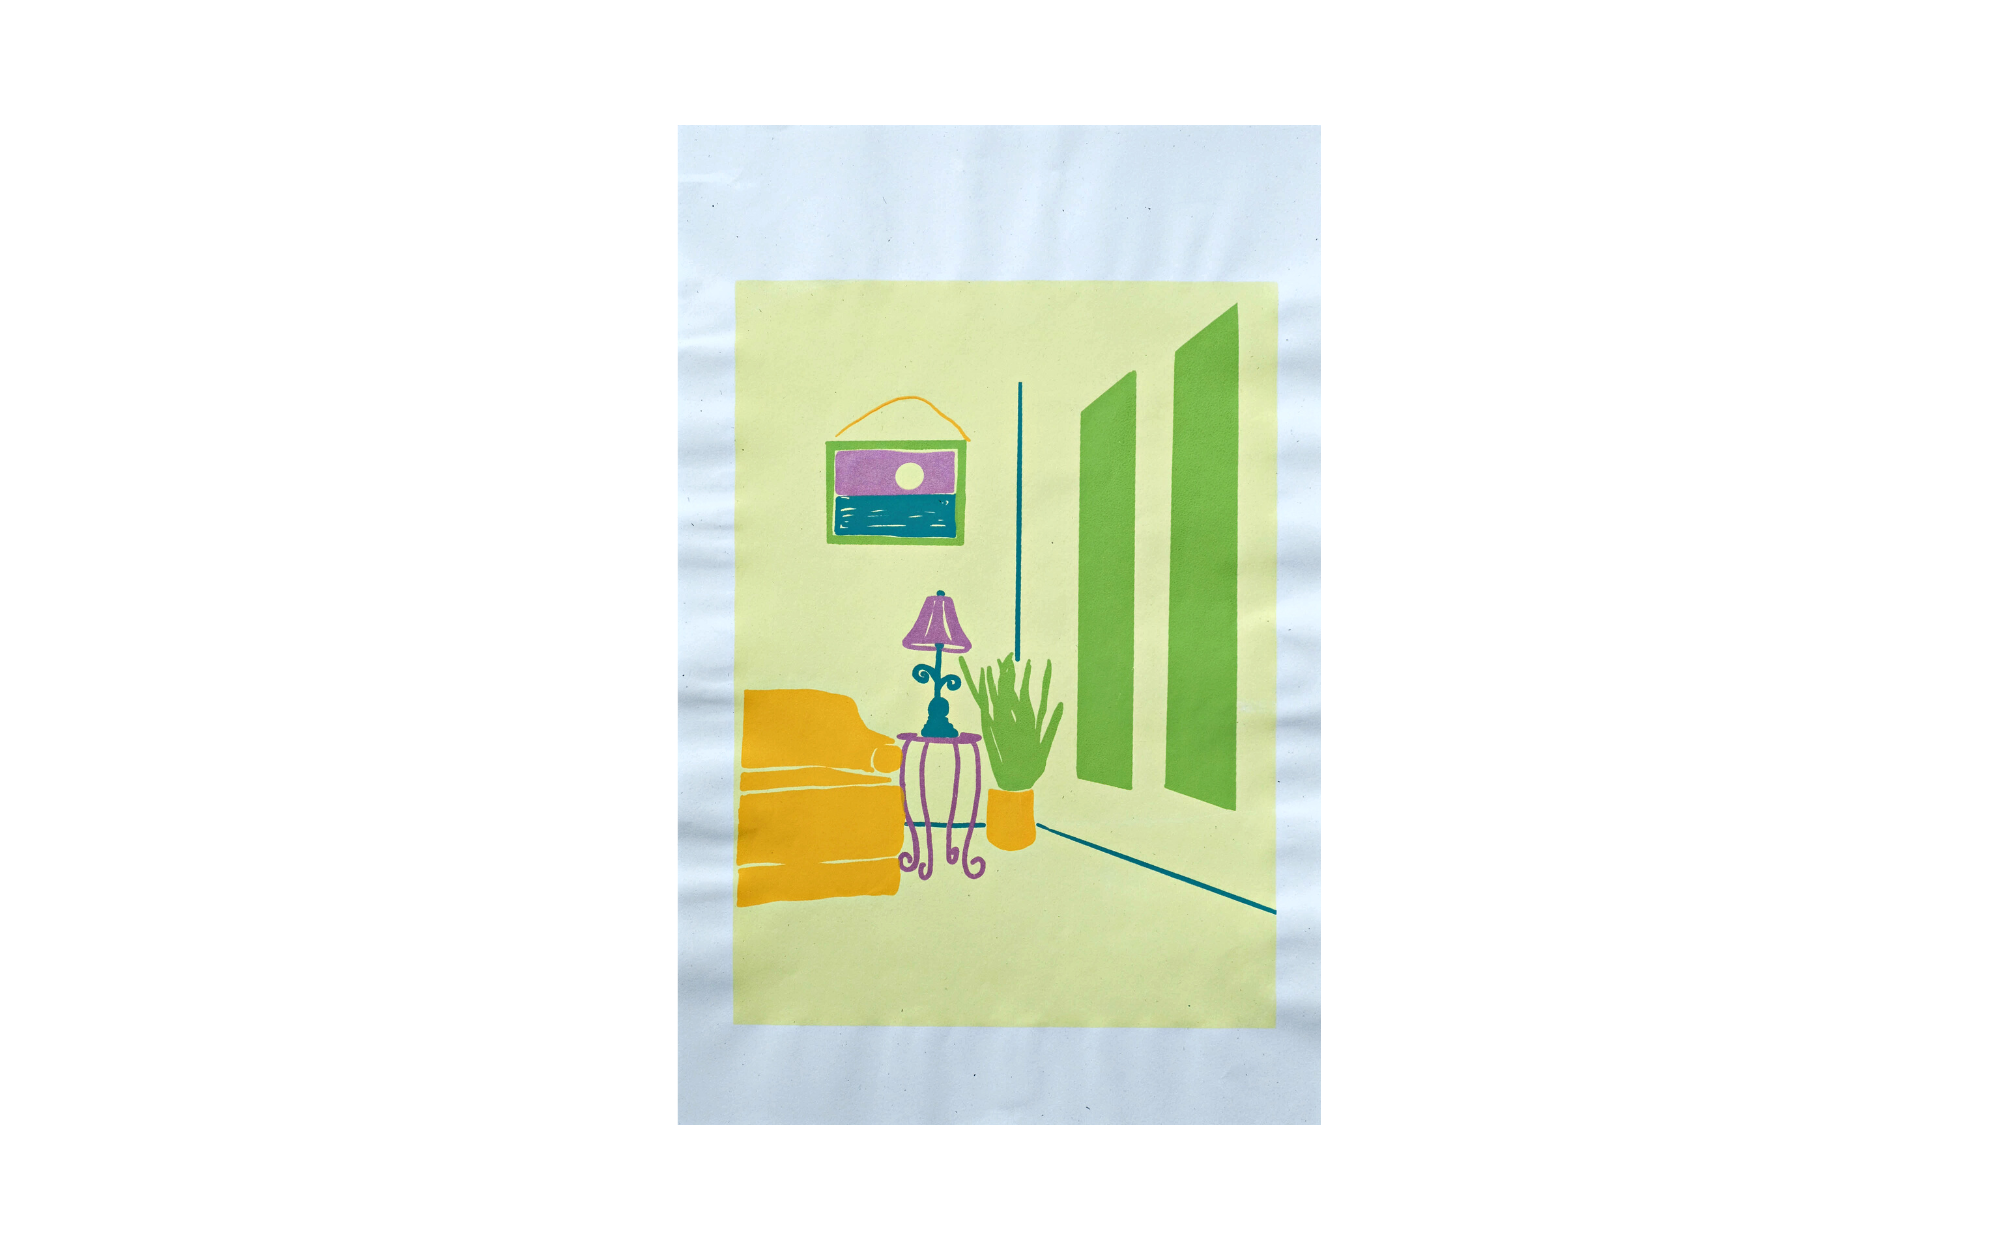  Brienna Kane,  Favorite Room in Grandma’s House,  screenprint, 11 x 14”, $130 